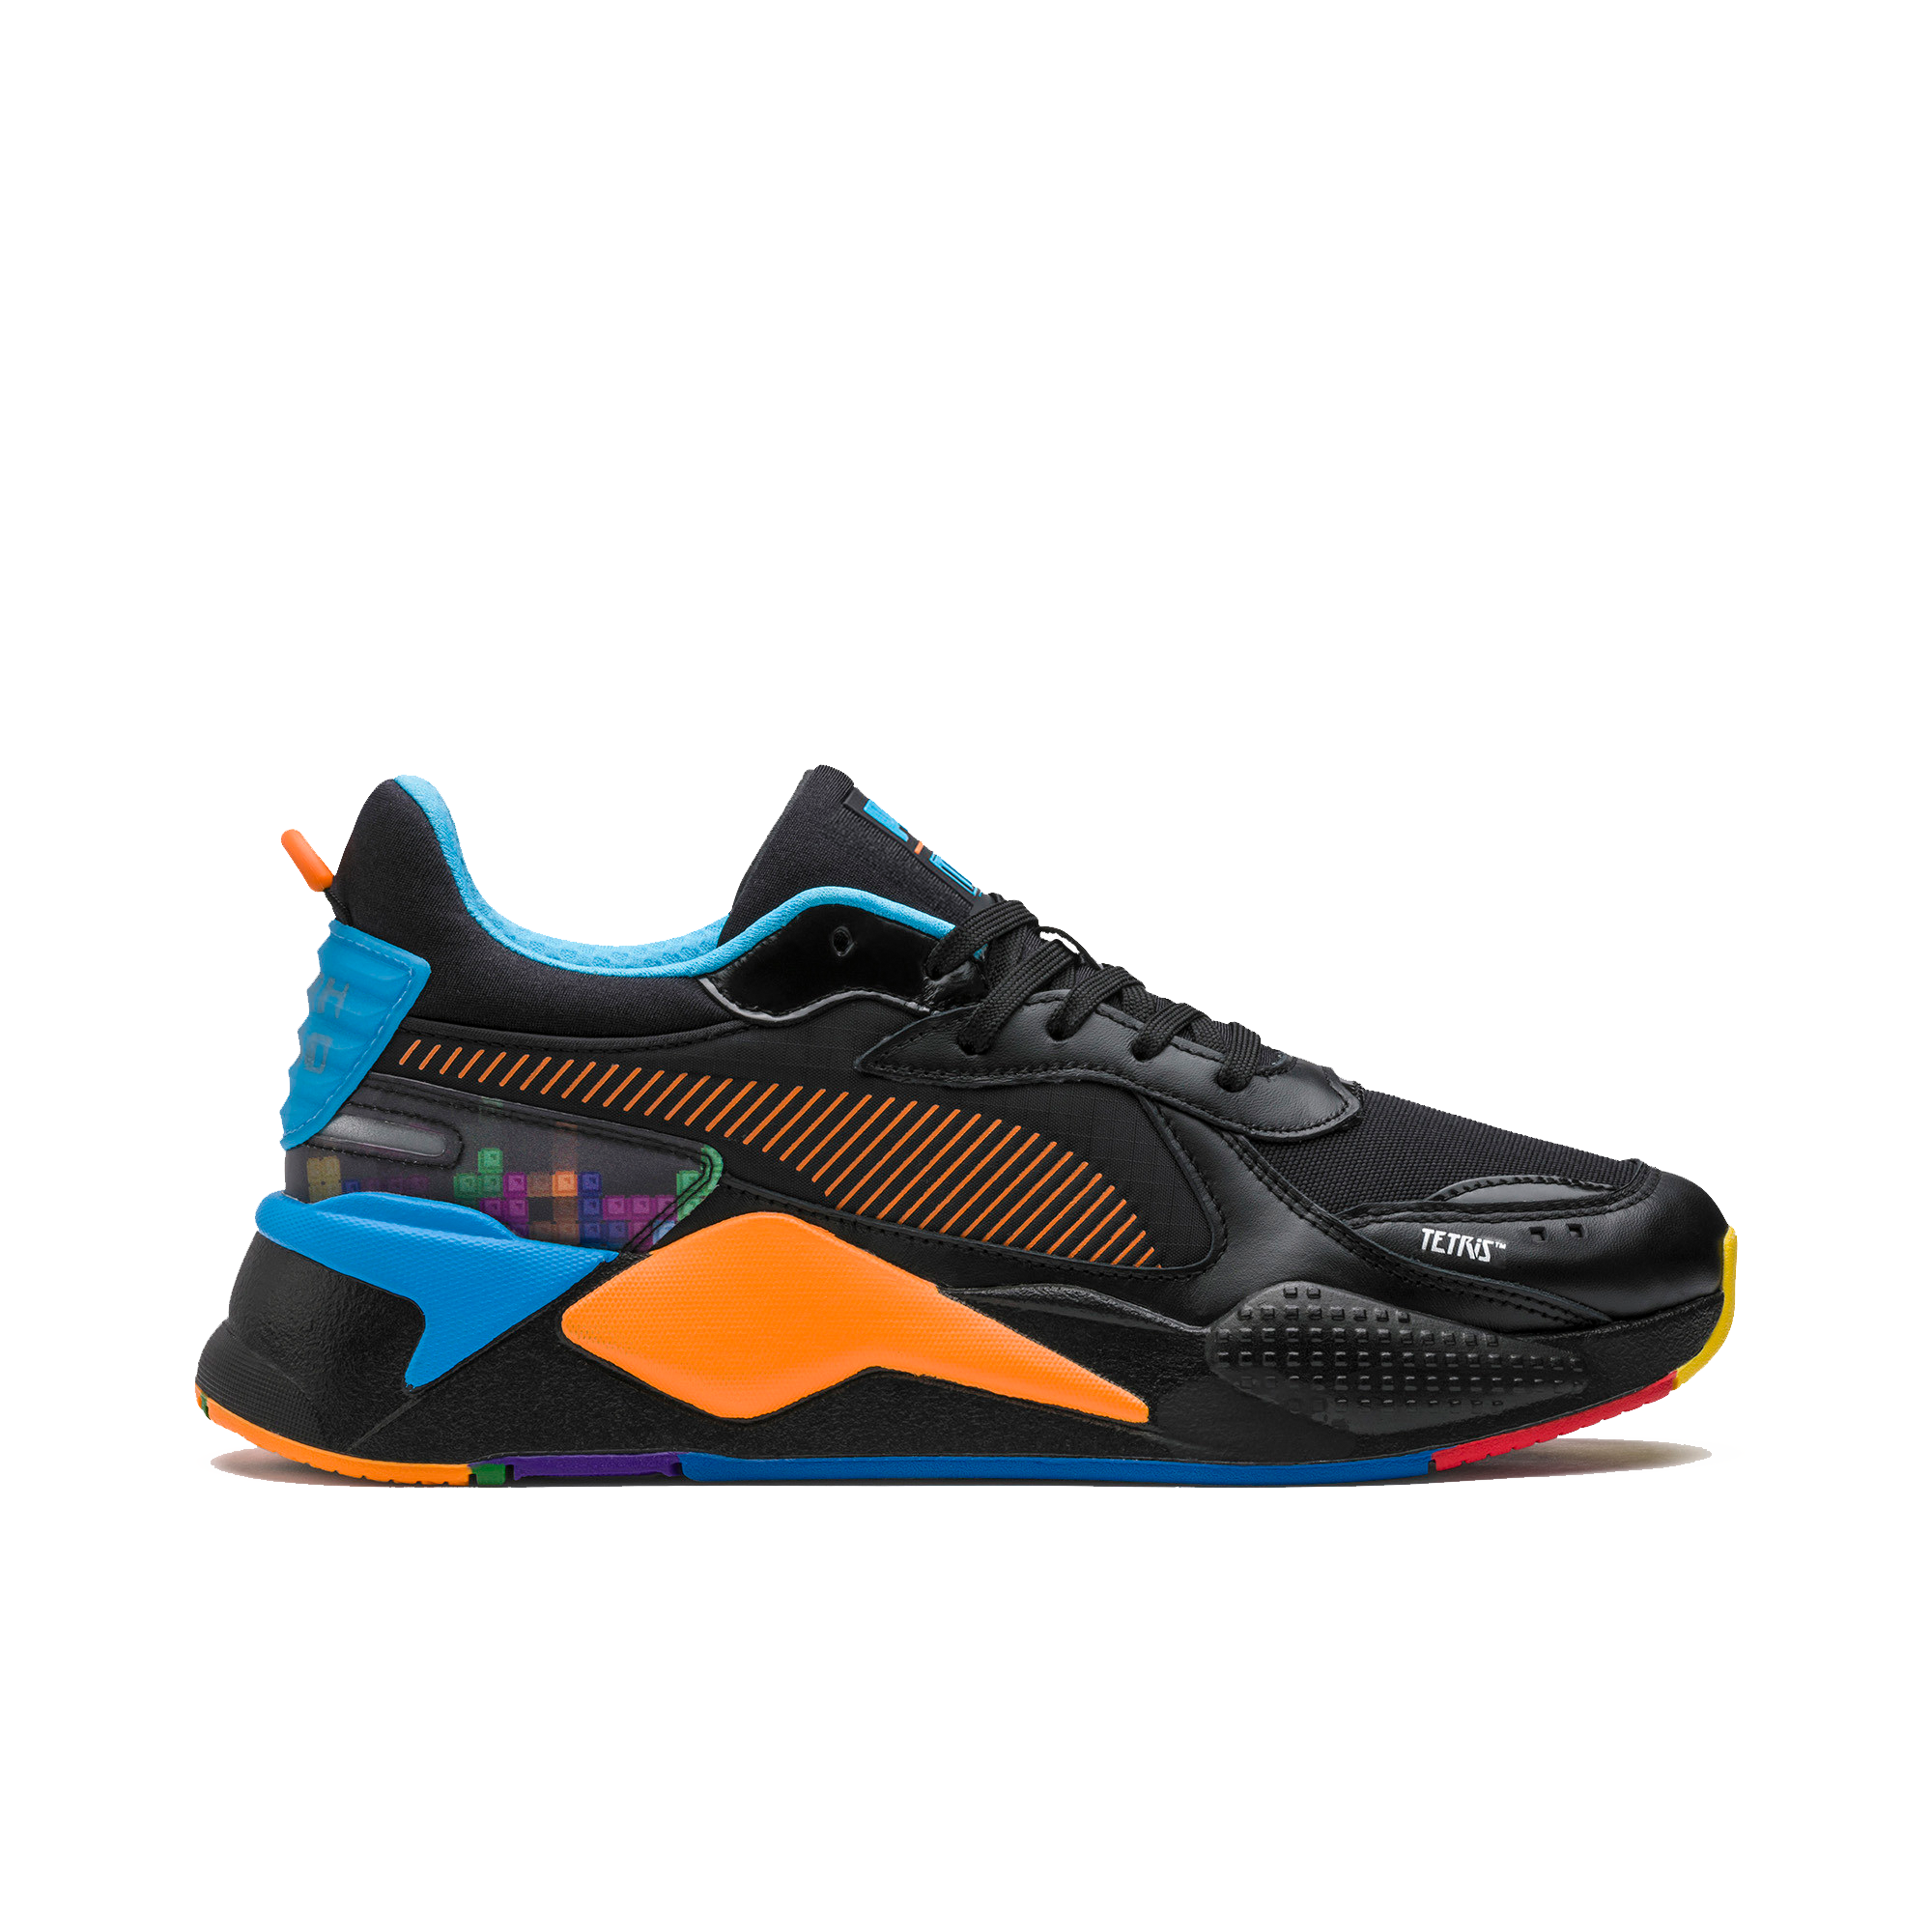 Sneakers Release: Puma x Tetris RS-X 